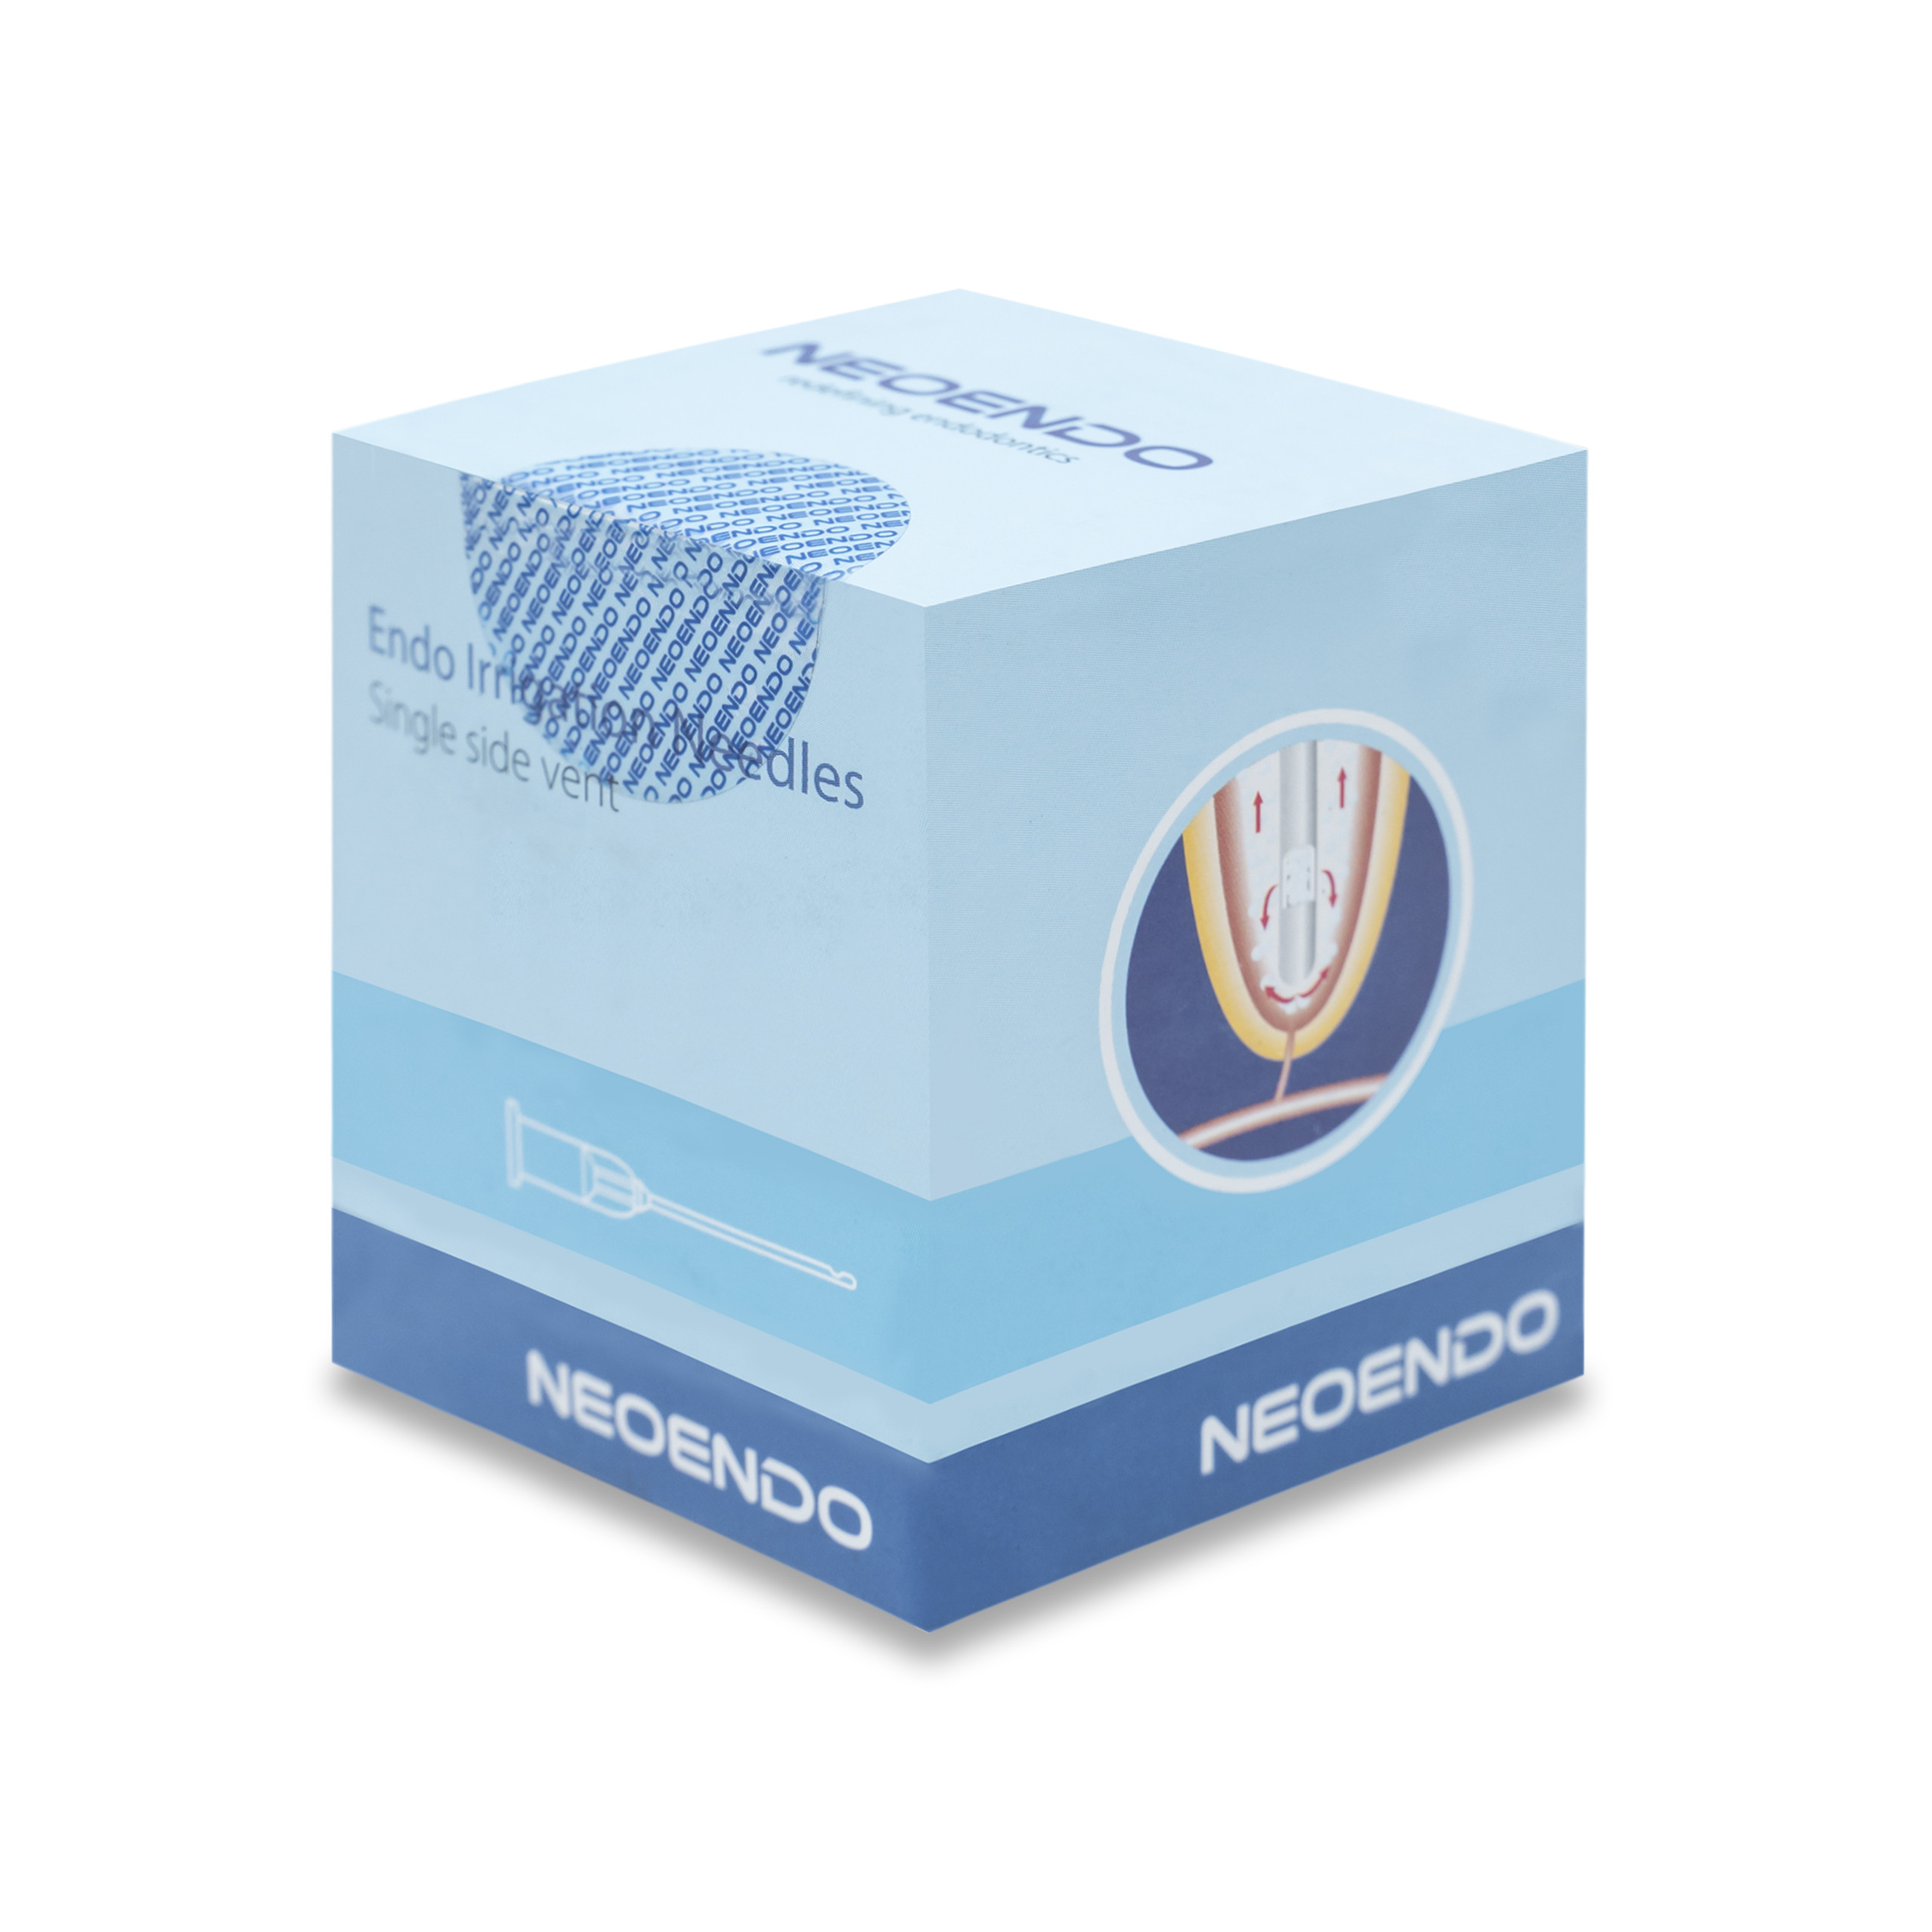 Neoendo Endo Irrigation Needles Single Side Vent 30 Gauge Length 25mm 50pcs